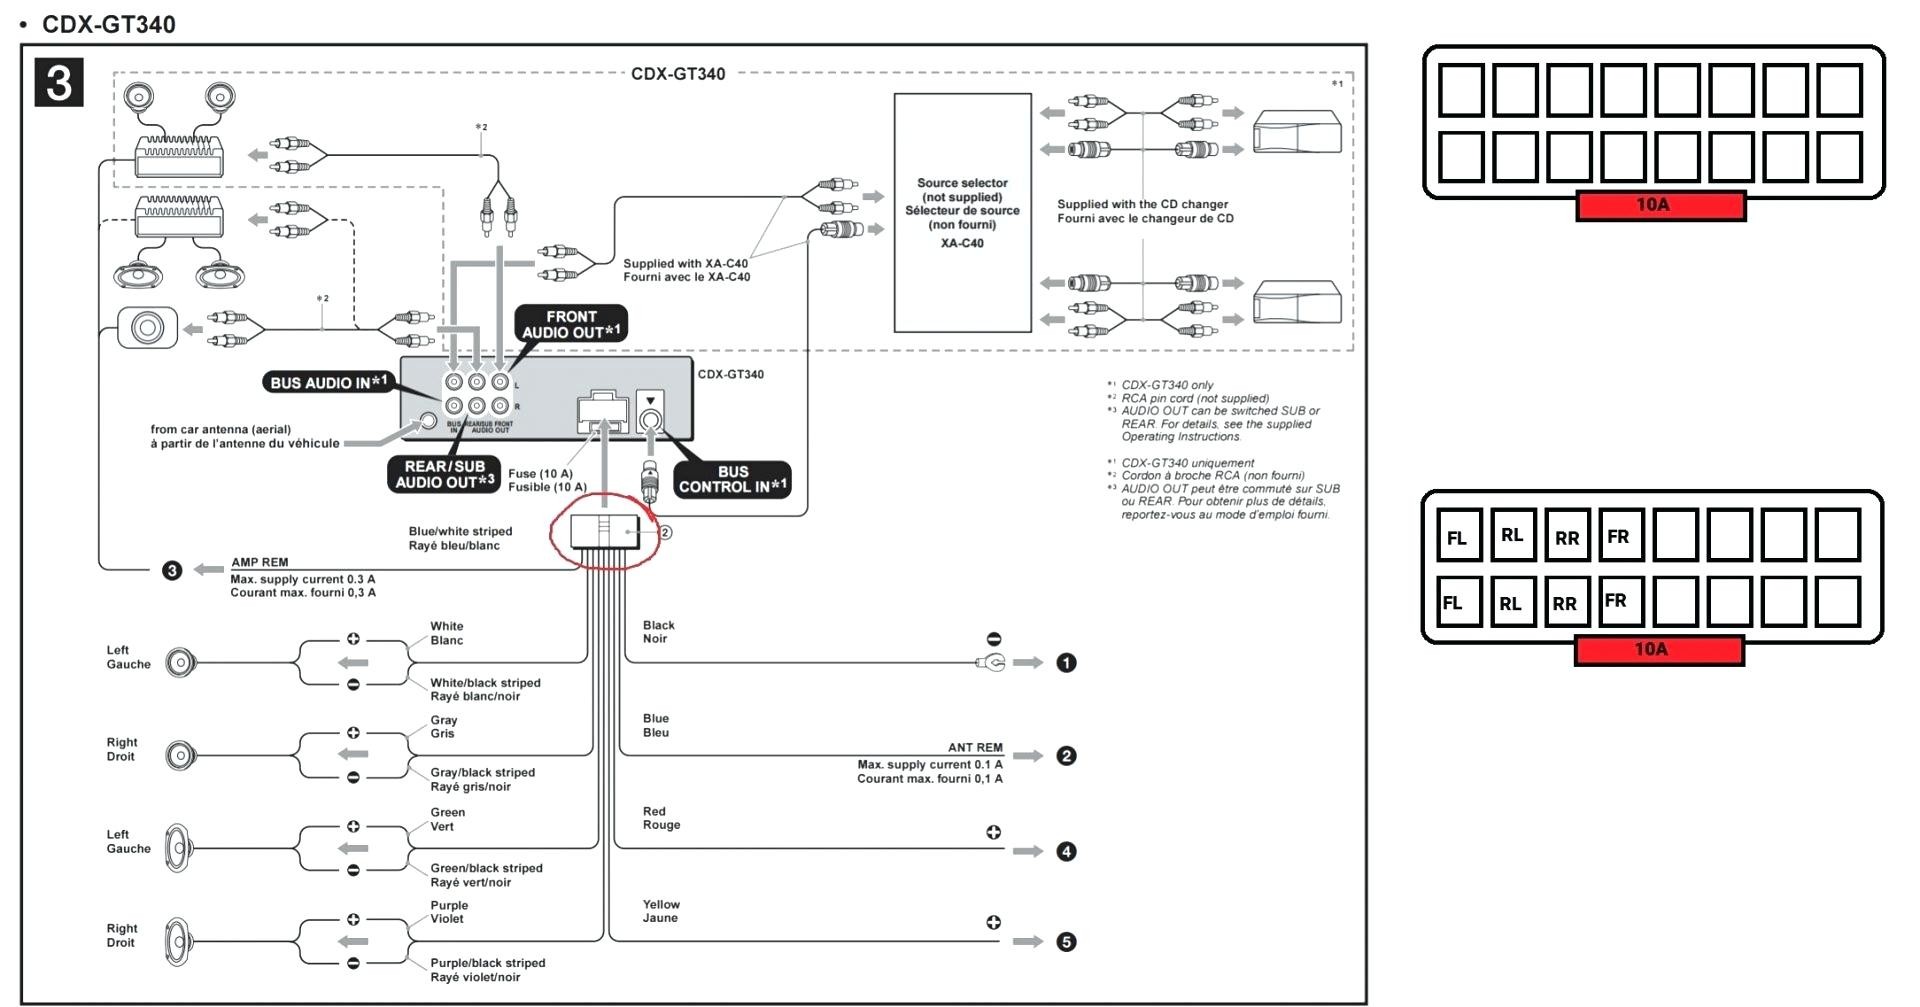 Audiovox Car Alarm Wiring Diagram Vehicle Wiring Diagrams for Alarms Best Car Diagram Remarkable Of Audiovox Car Alarm Wiring Diagram